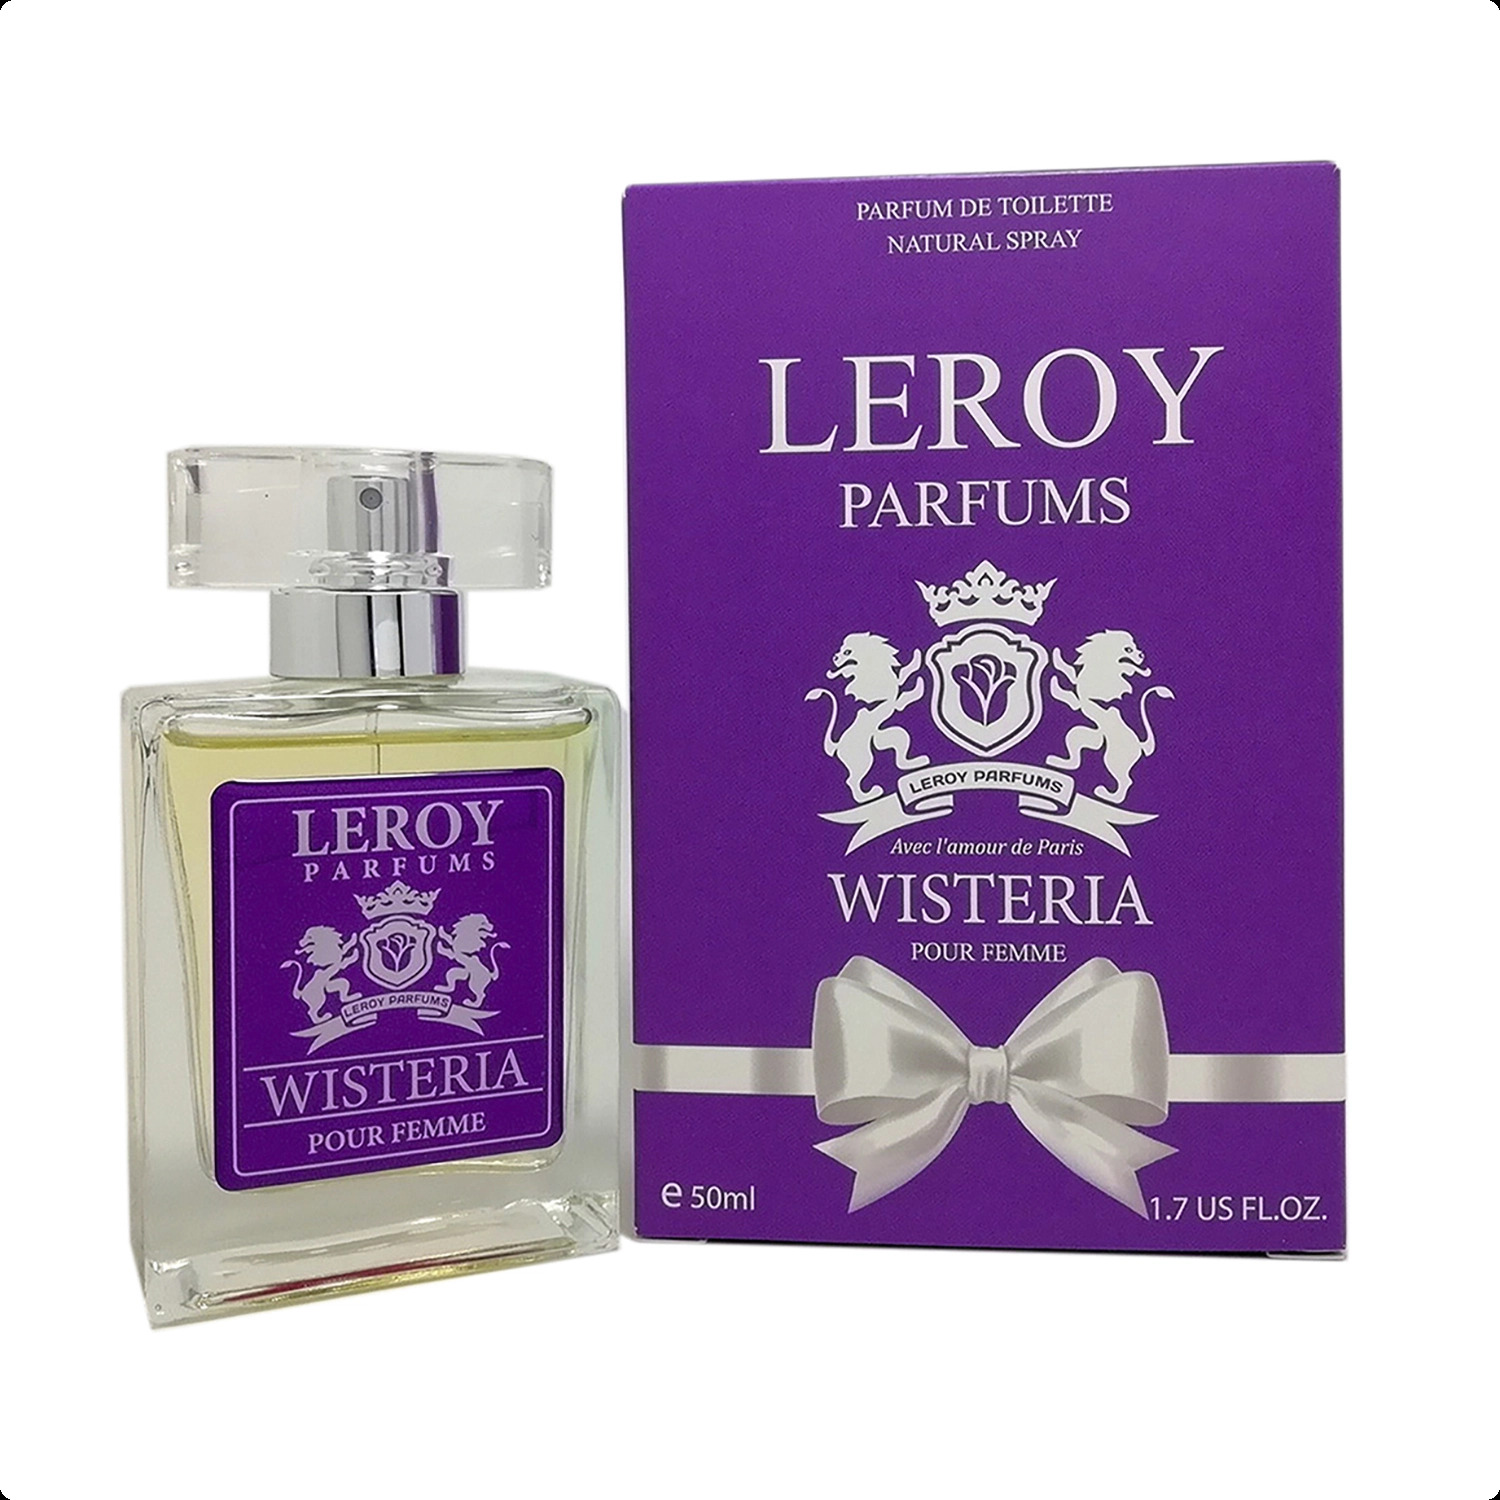 Леруа парфюмс Вистерия для женщин